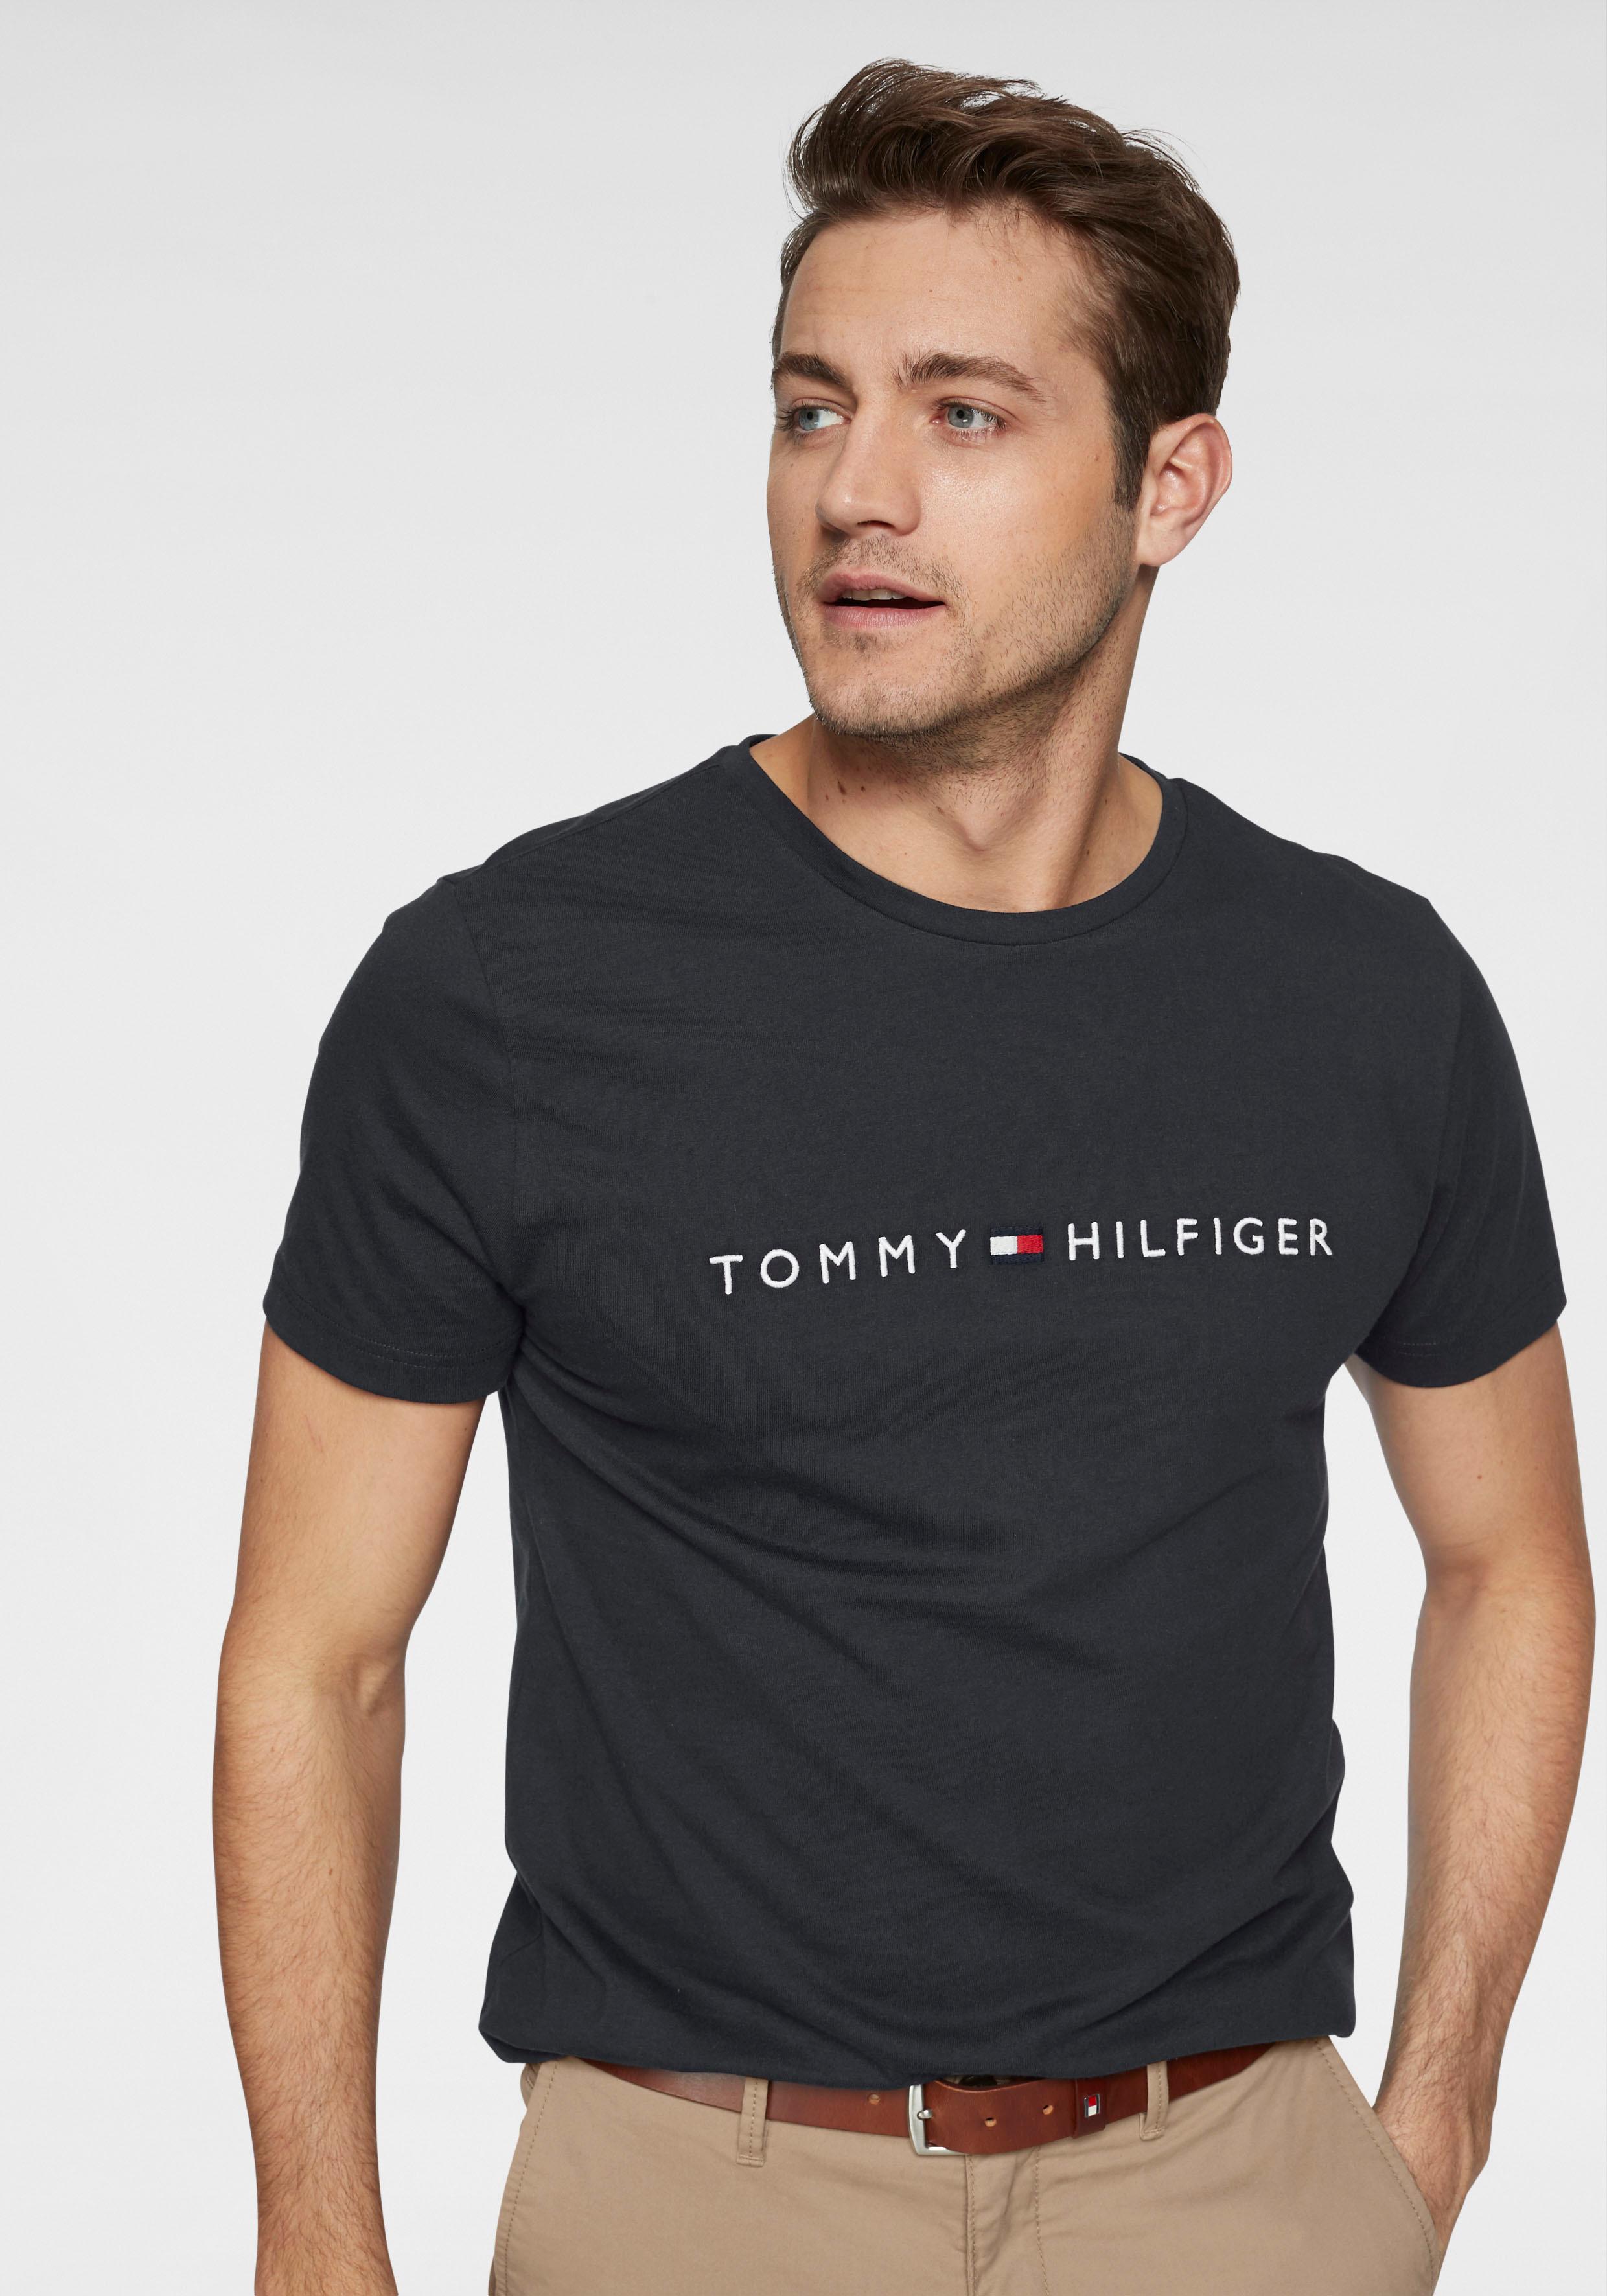 Tommy Hilfiger T-Shirt TOMMY FLAG HILFIGER TEE blau Herren Shirts